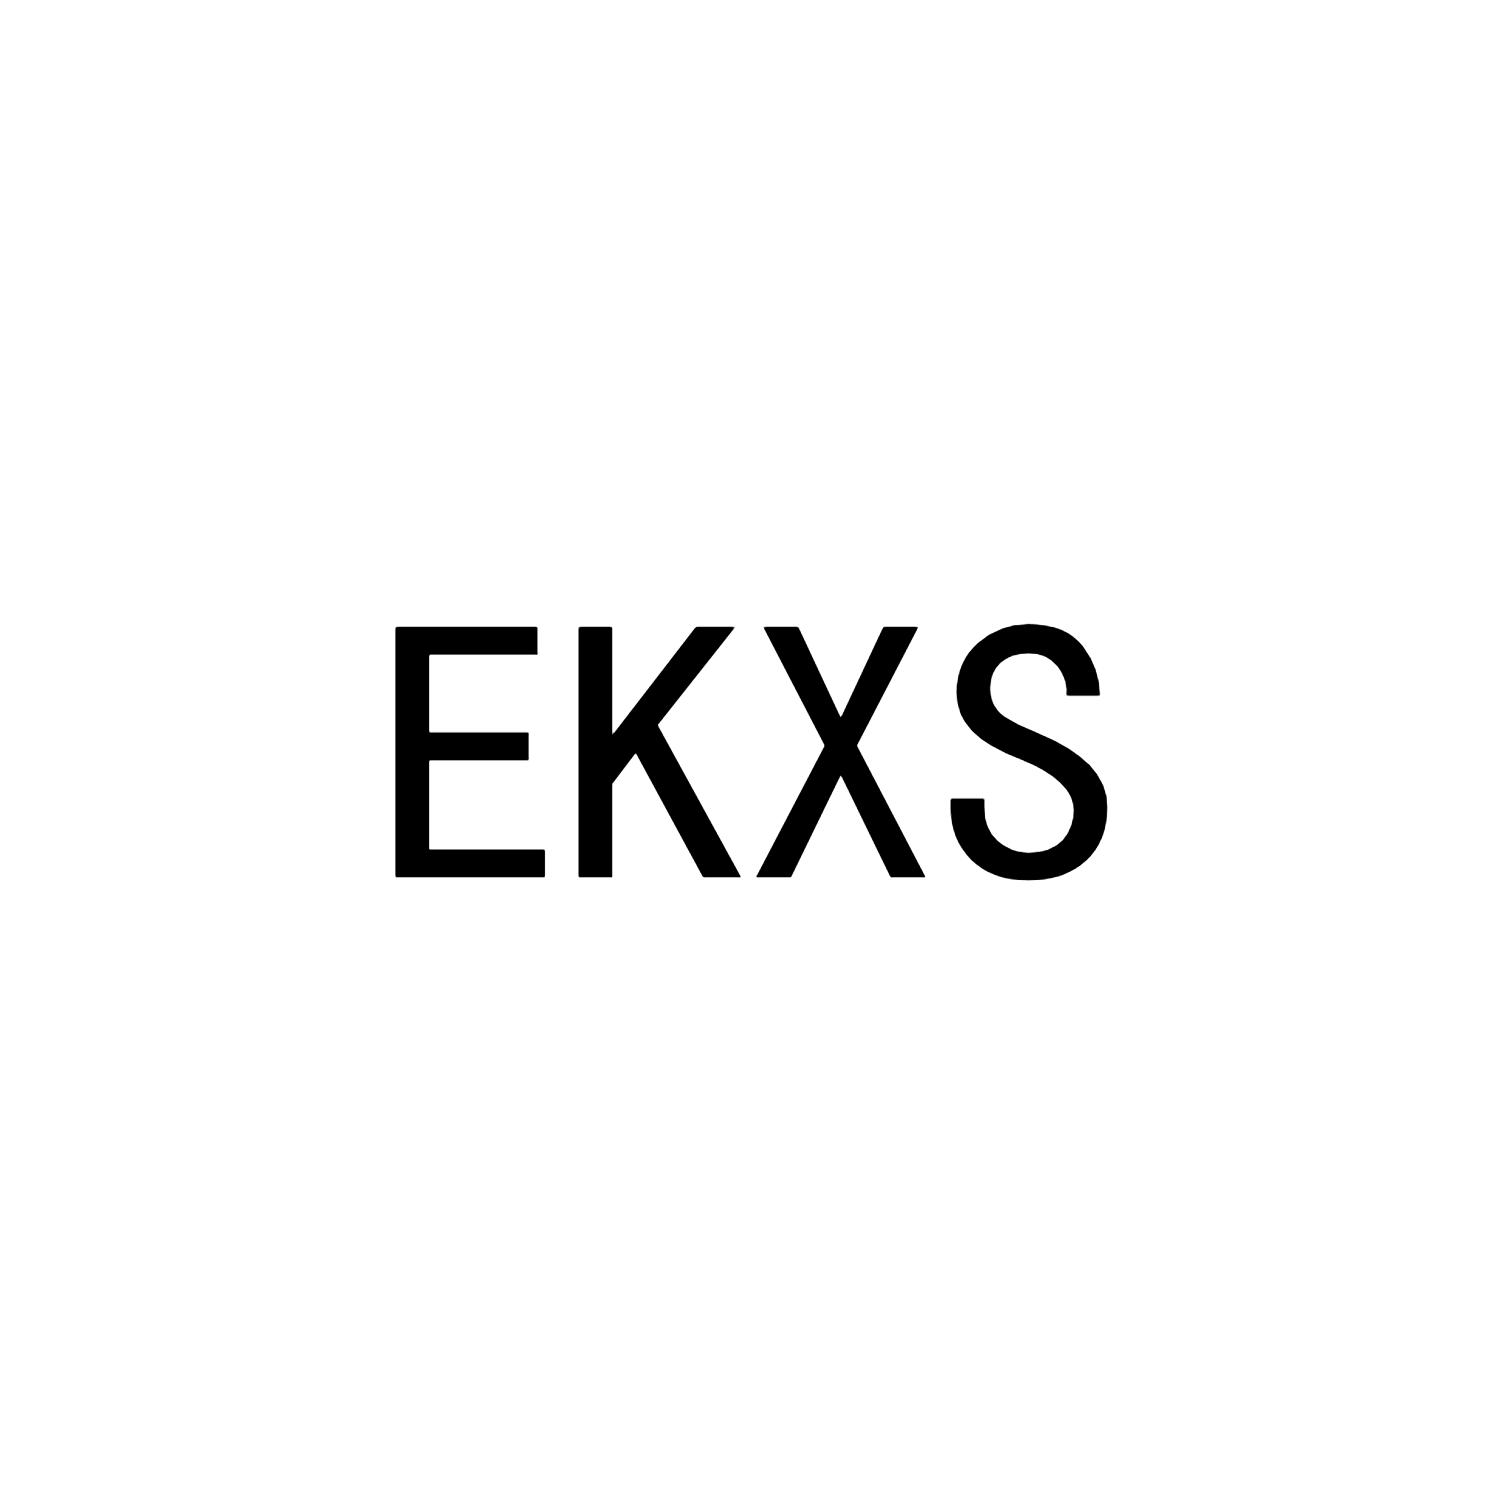 EKXS